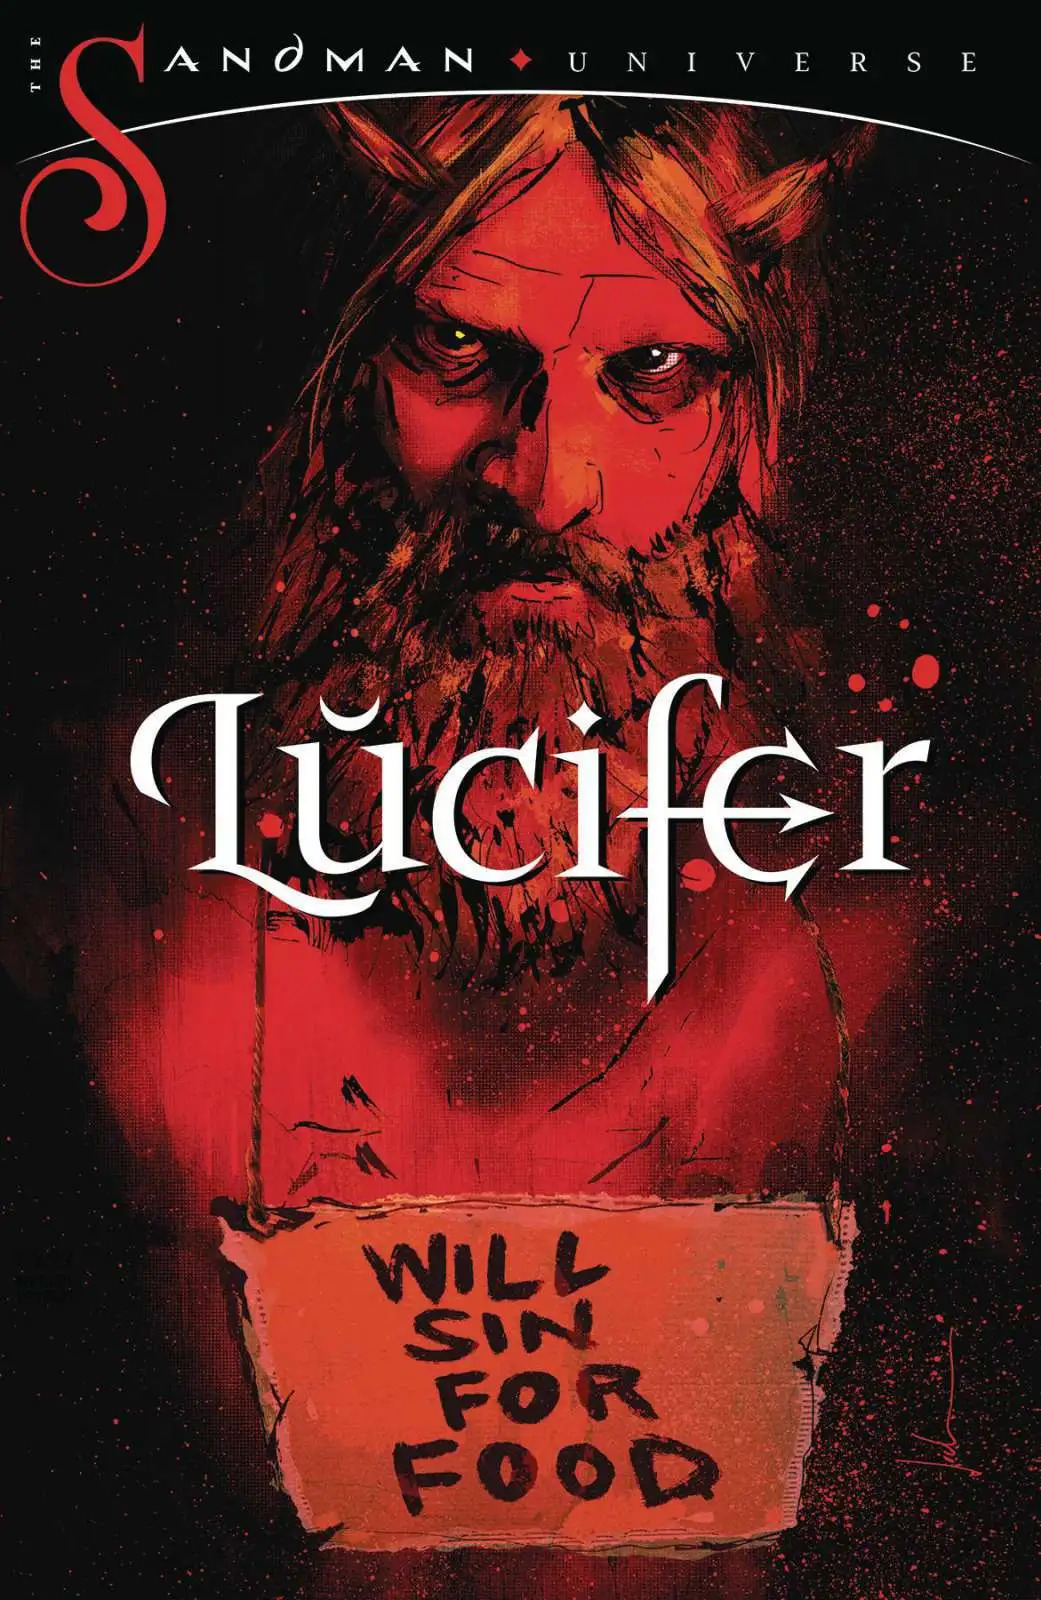 DC Lucifer The Infernal Comedy Trade Paperback Comic Book Volume 1 [The Sandman Universe]